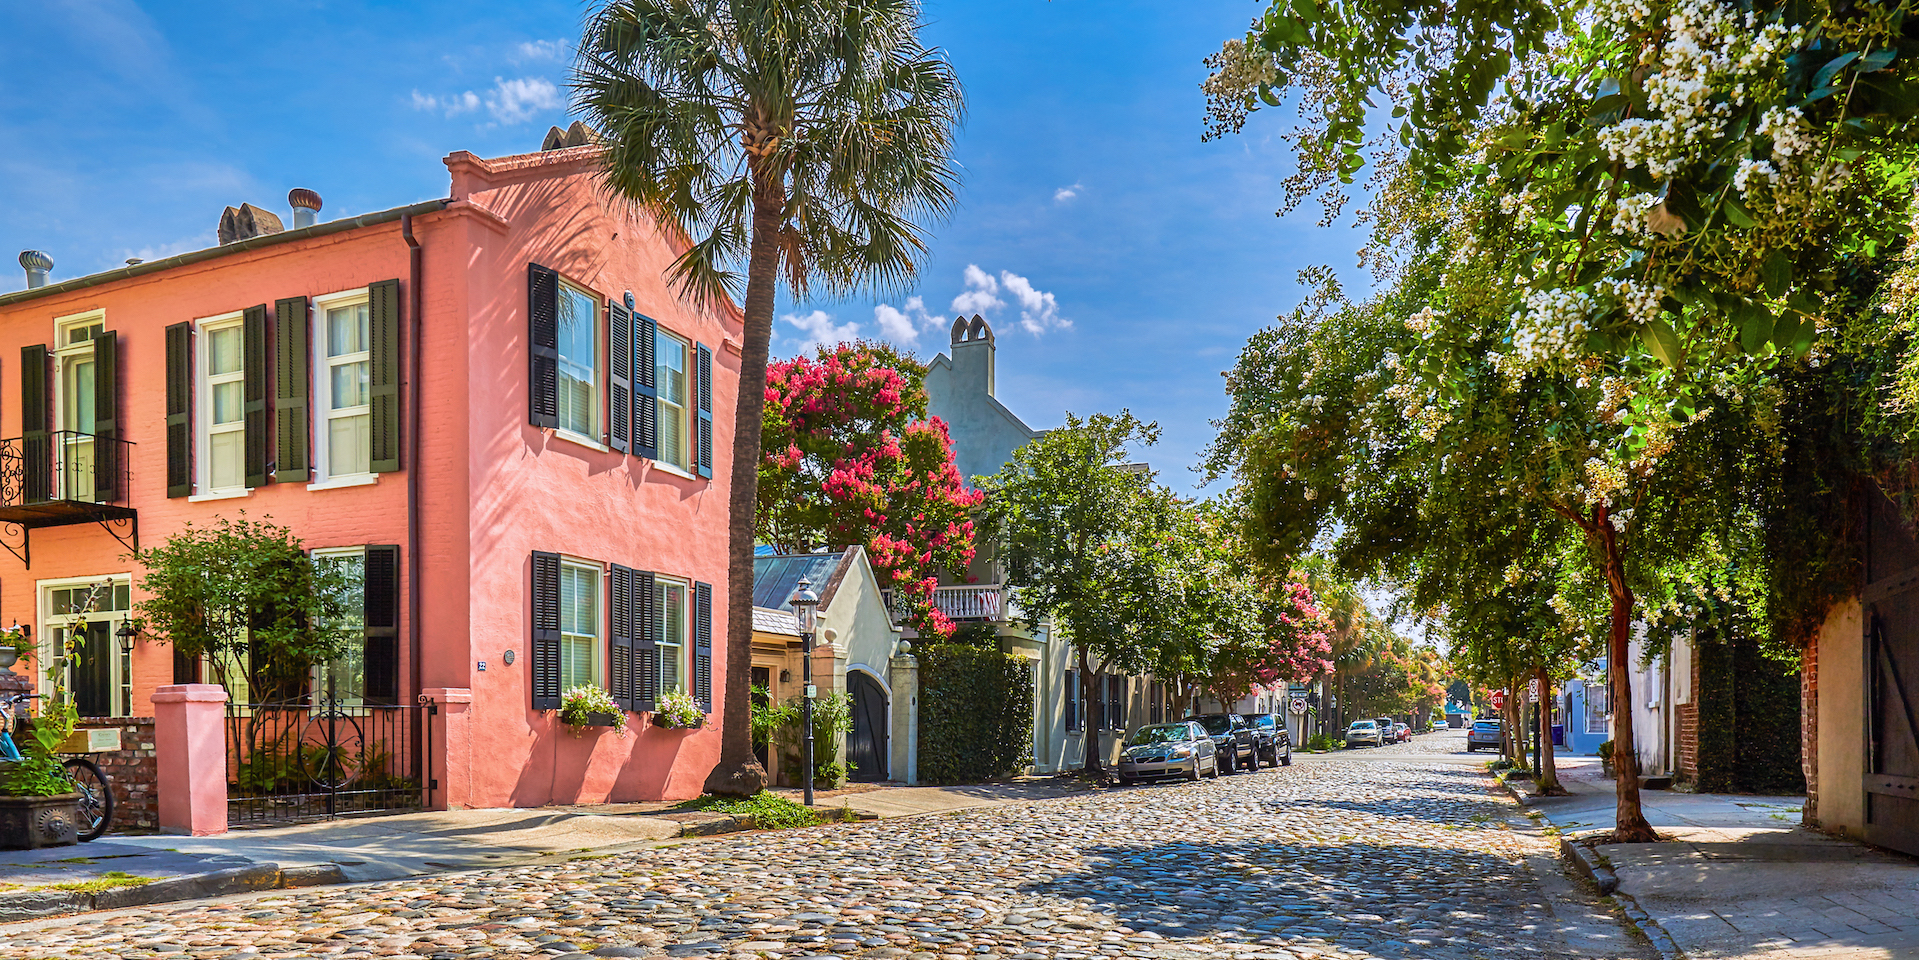 Charleston, South Carolina cobblestone street